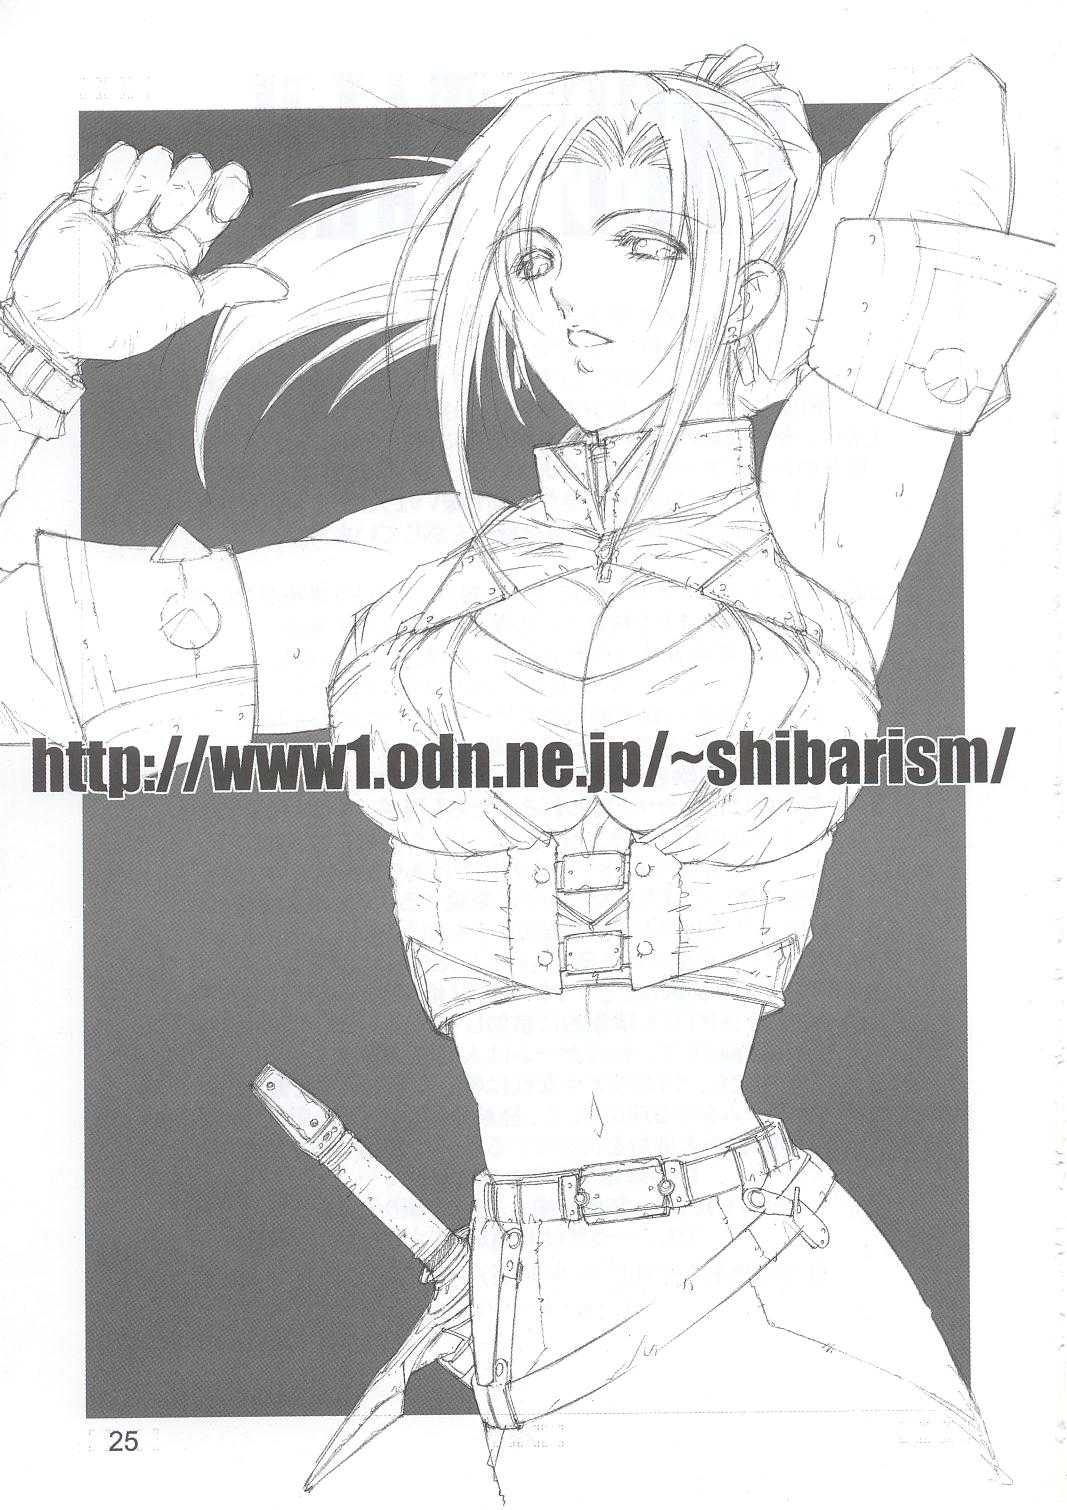 (C63) [Shibarism (Shibari Kana)] FRIEND LIST (Final Fantasy XI) (C63) [Shibarism (縛霞奈)] FRIEND LIST (ファイナルファンタジーXI)